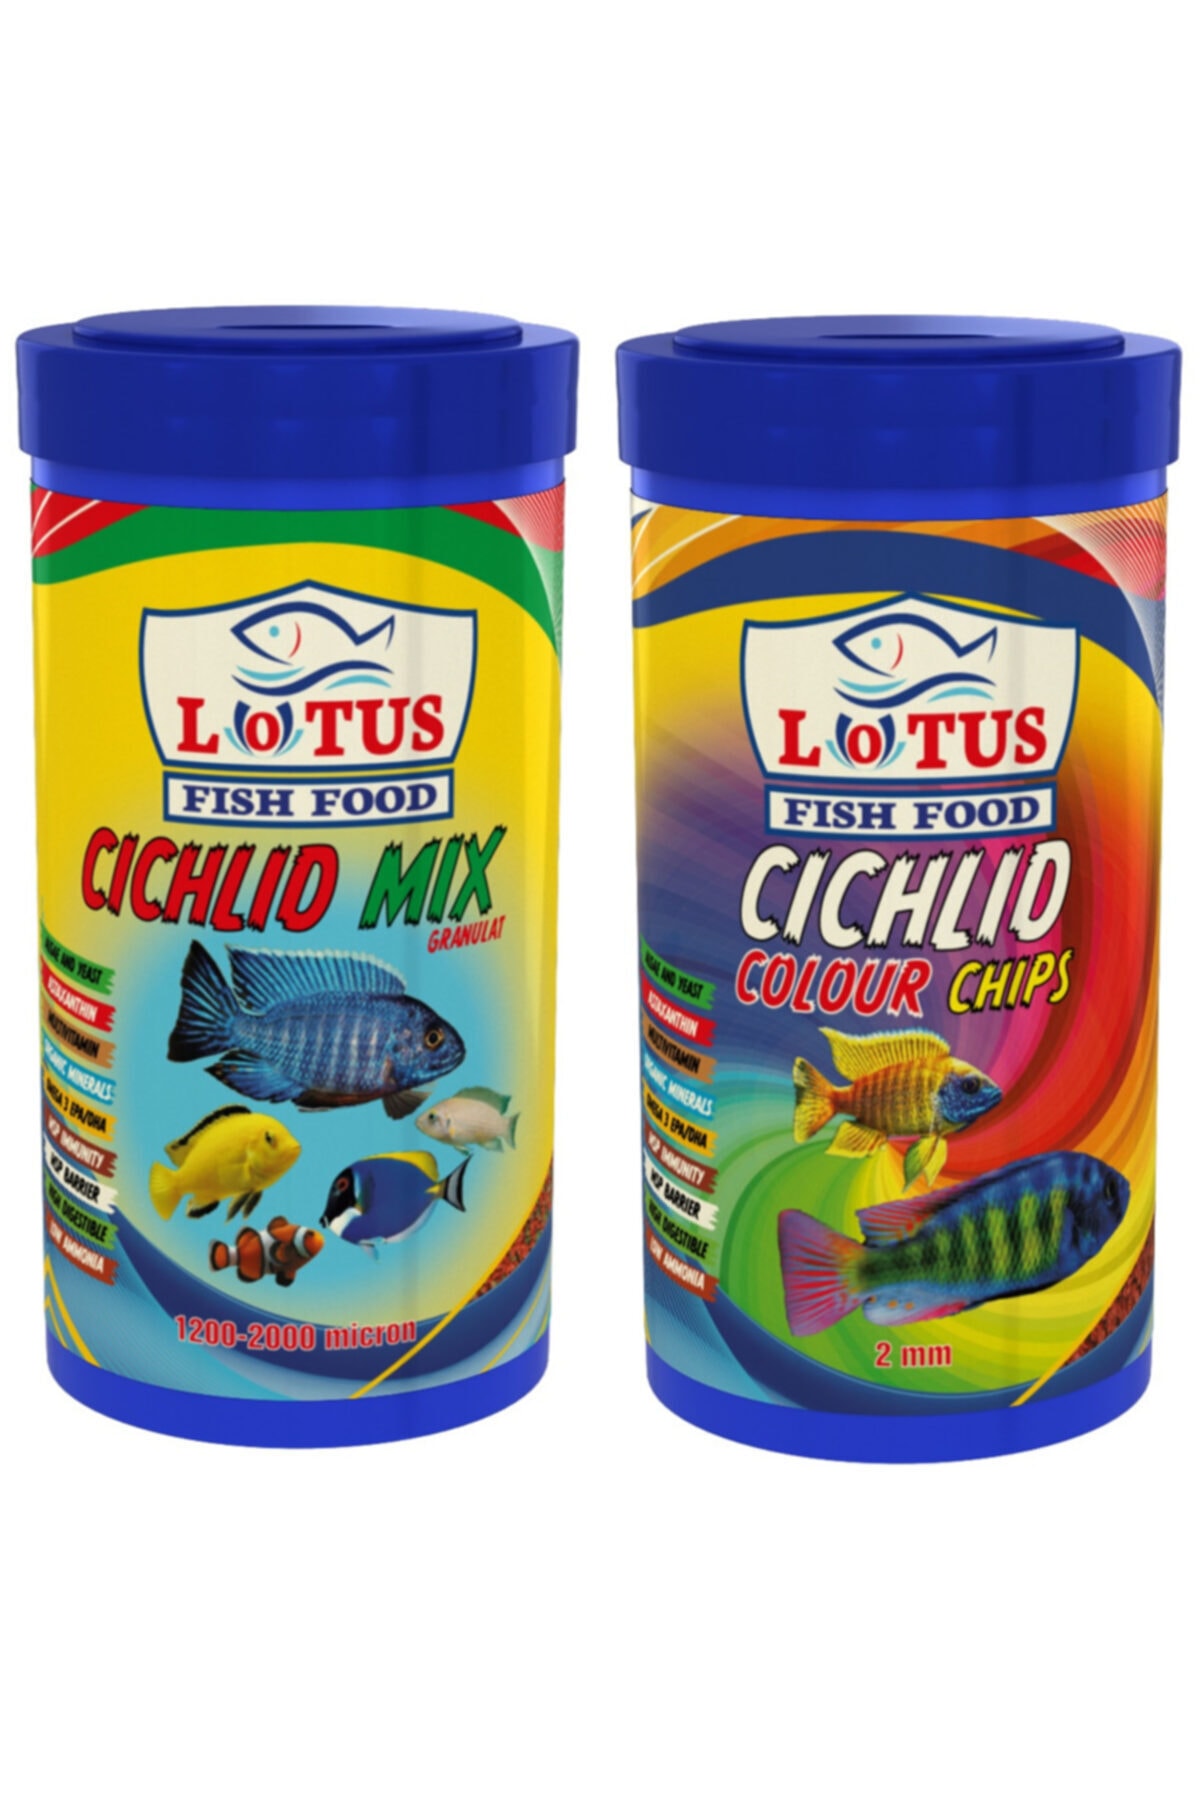 Lotus Cichlid Mix 1000 Ml Ve Cichlid Colour Chips 1000 Ml Balık Yemi